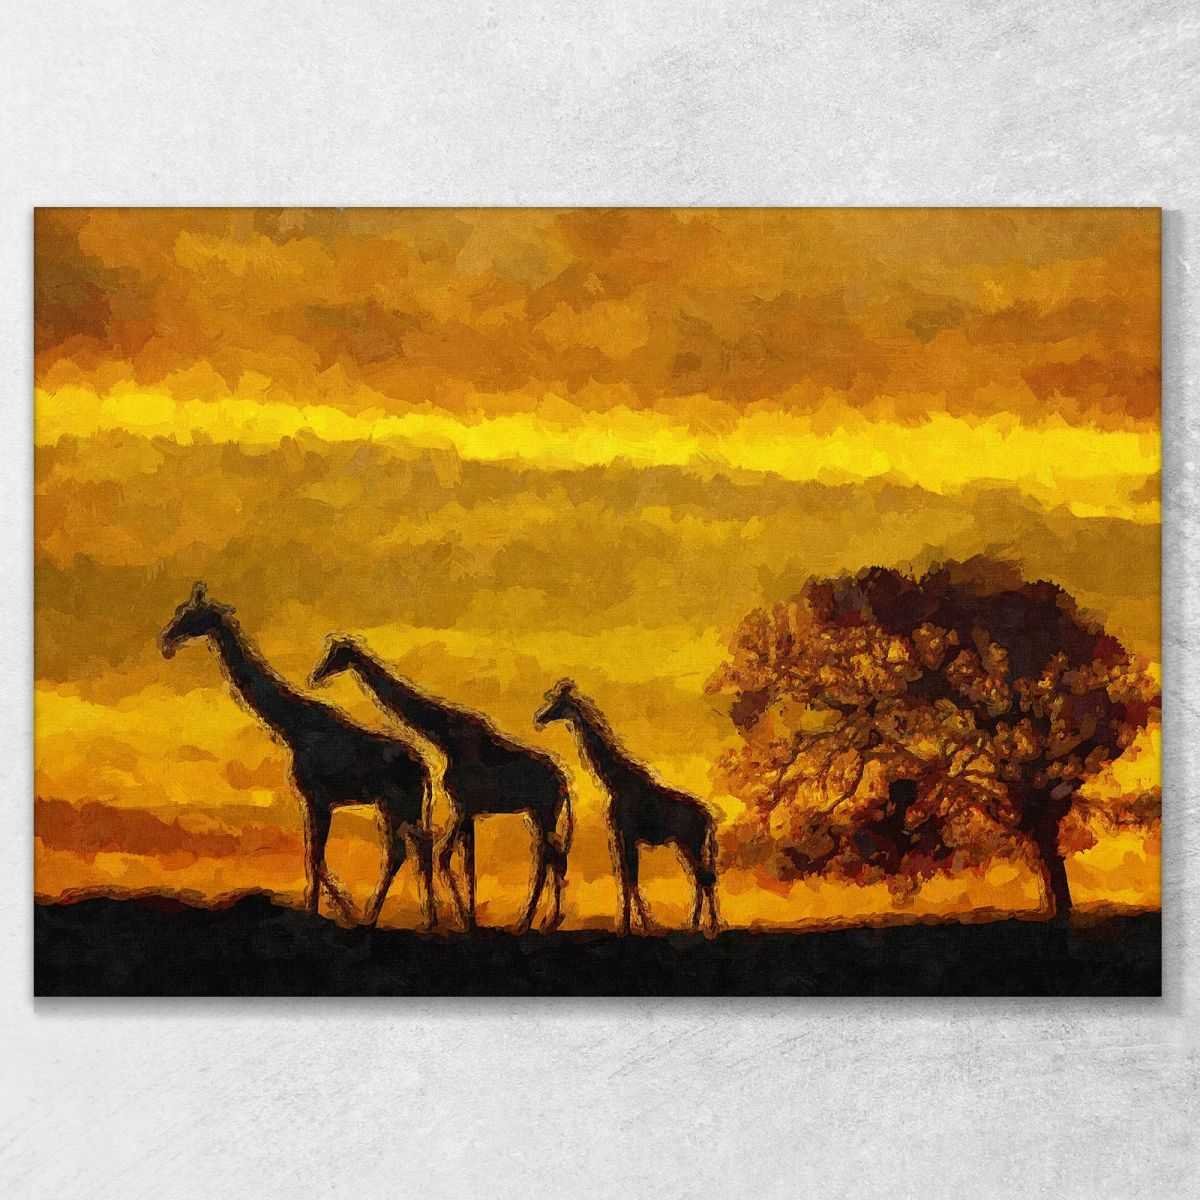 ❤️️ Quadro etnico giraffe al tramonto quadro africano stampa su tela afr8